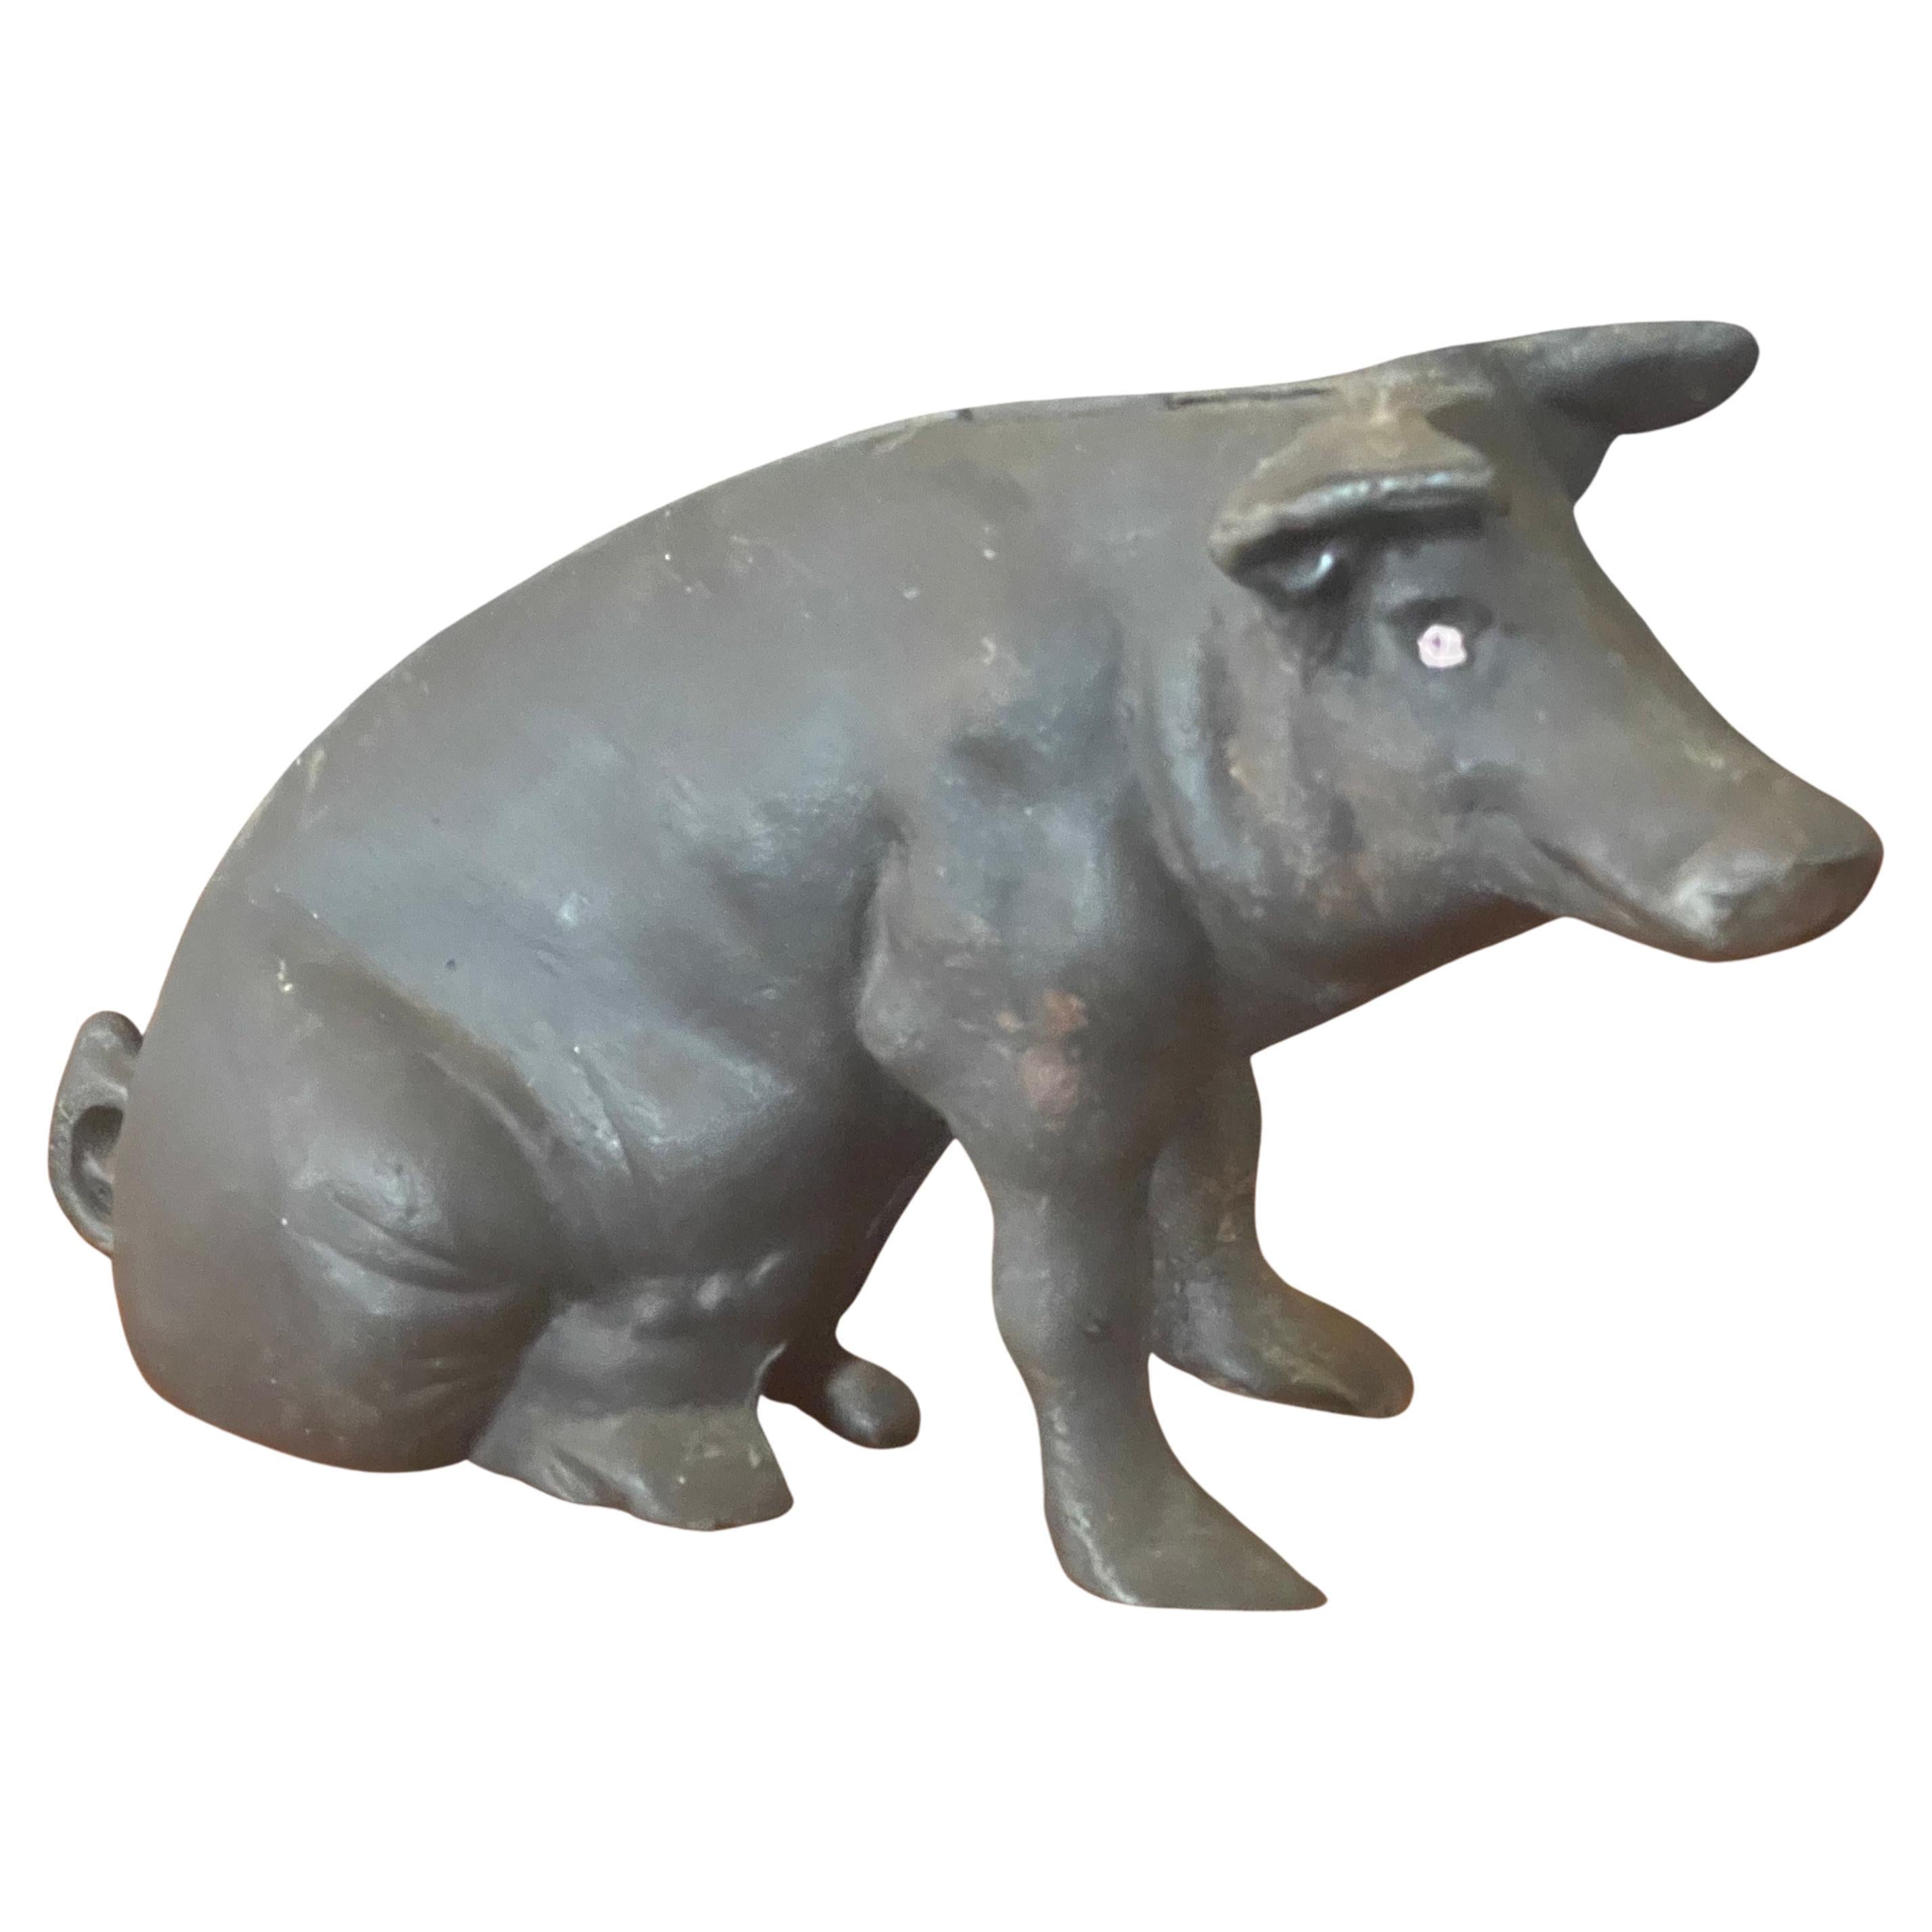 SIX Miniature Flying Pig Cast Iron Metal Figurines Statues 0184-10006 